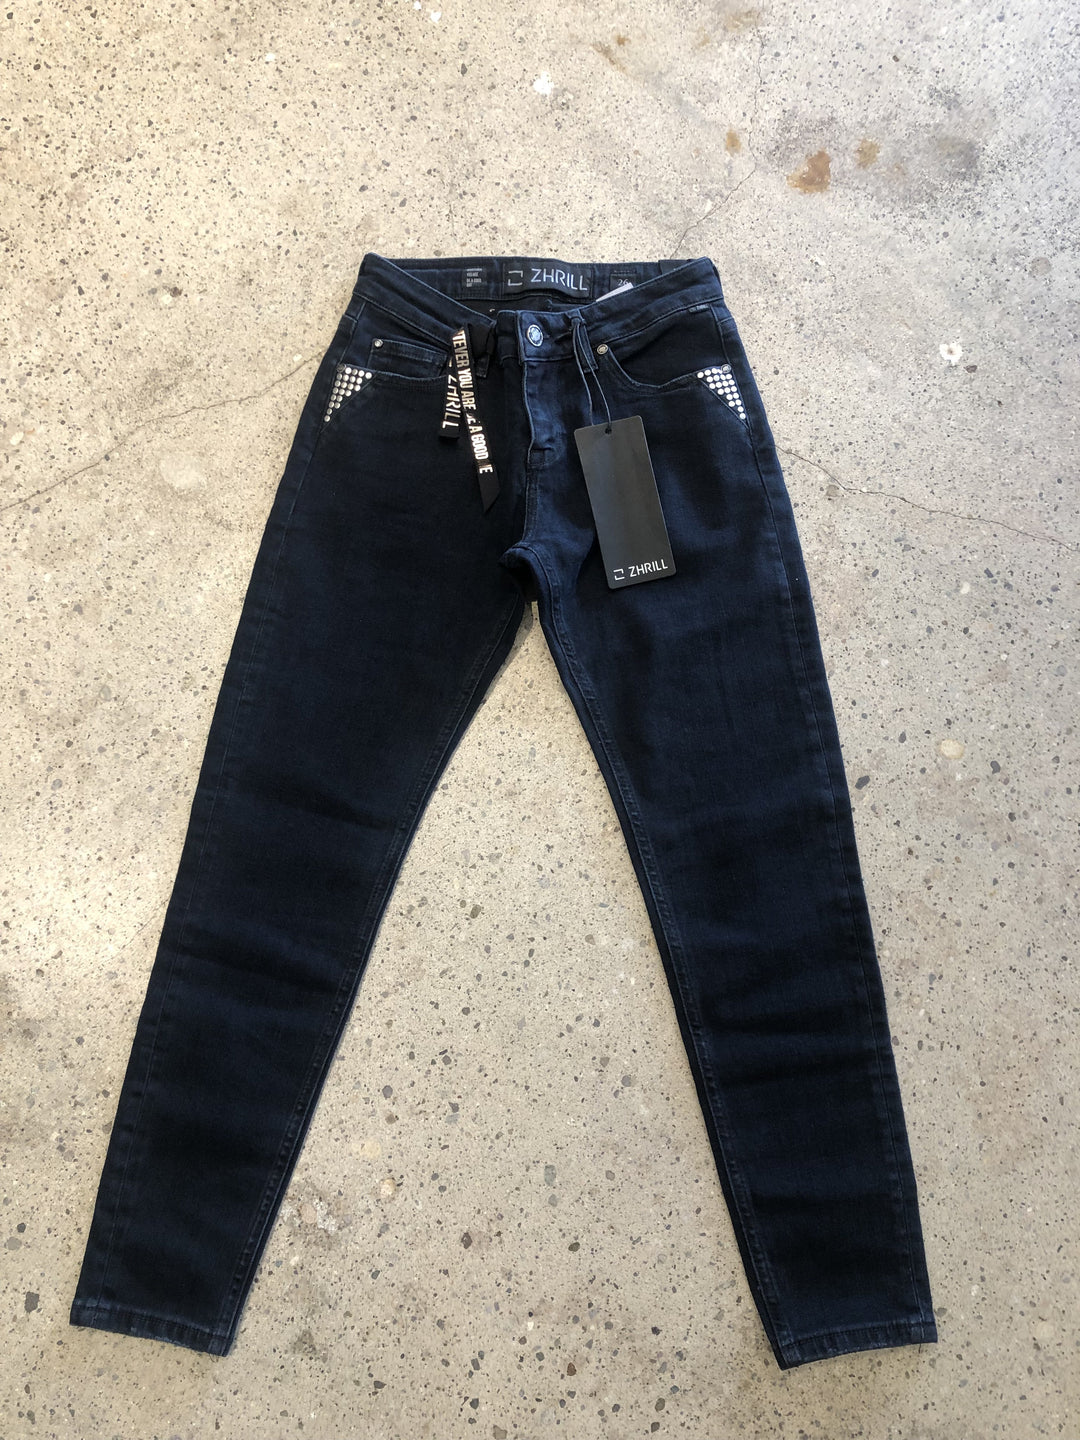 Zhrill Nova Black Jeans - Shop 9